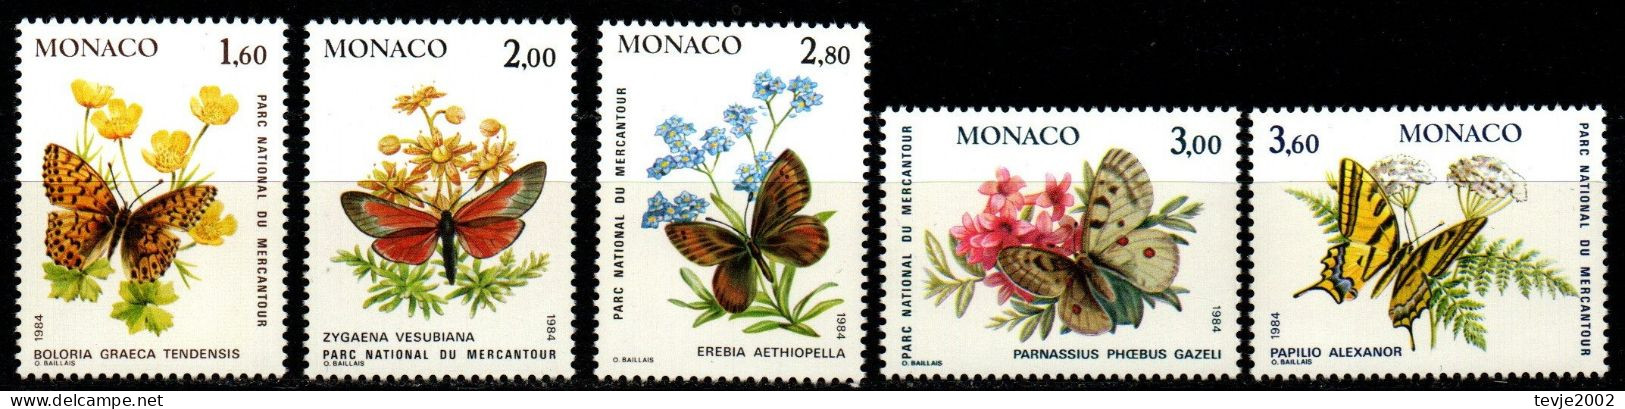 Monaco 1984 - Mi.Nr. 1624 - 1628 - Postfrisch MNH - Tiere Animals Schmetterlinge Butterflies - Vlinders